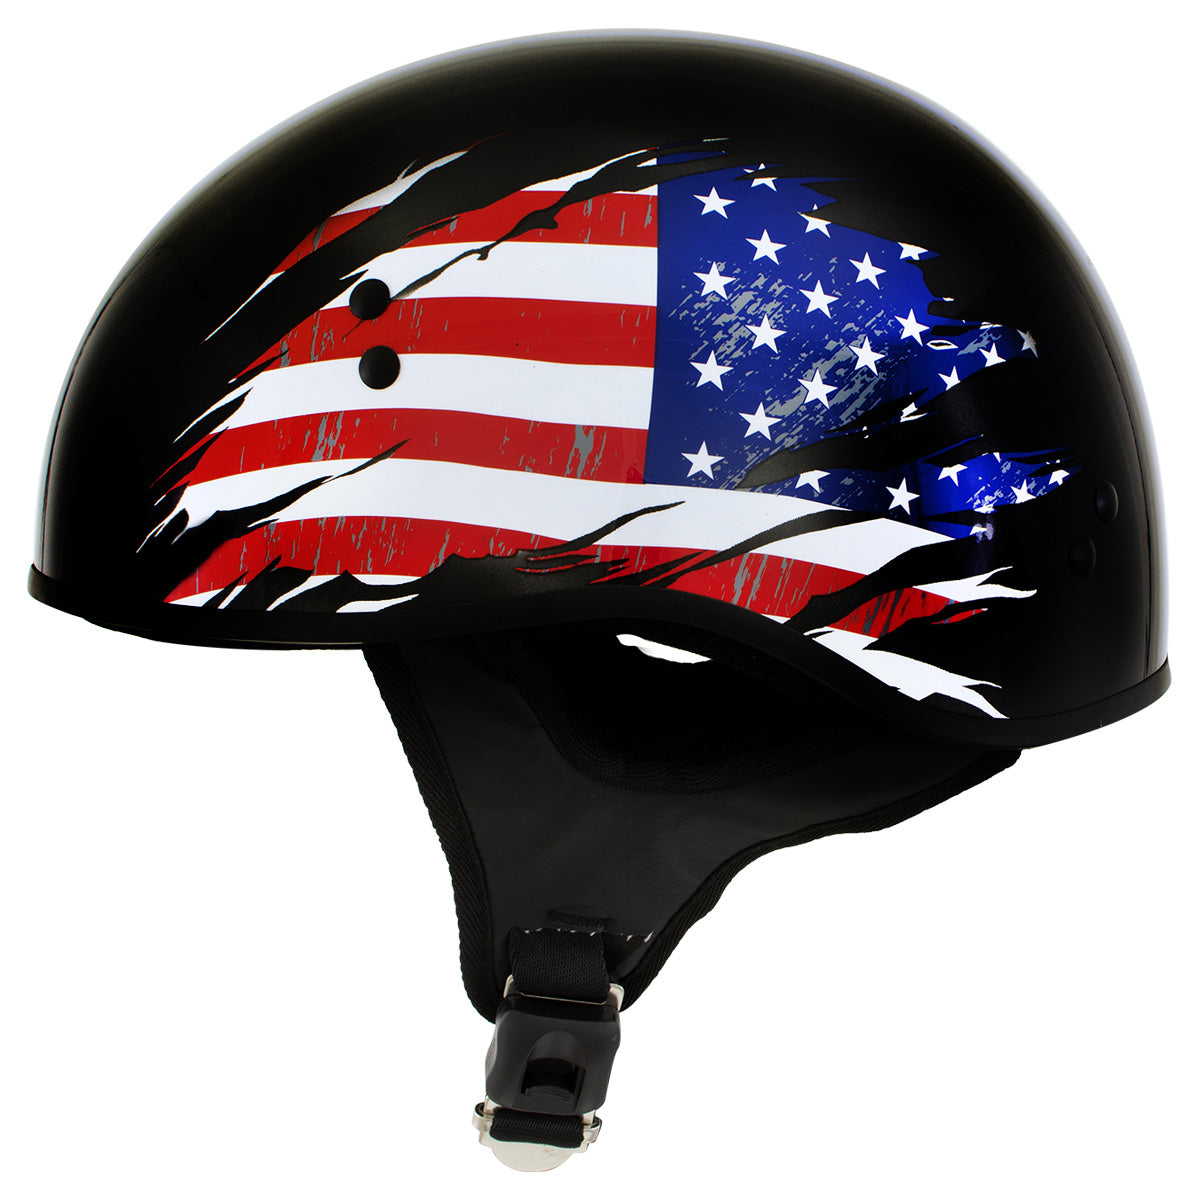 Outlaw T68 'Stars and Stripes' Advanced DOT Black Glossy Motorcycle Skull Cap Half Helmet